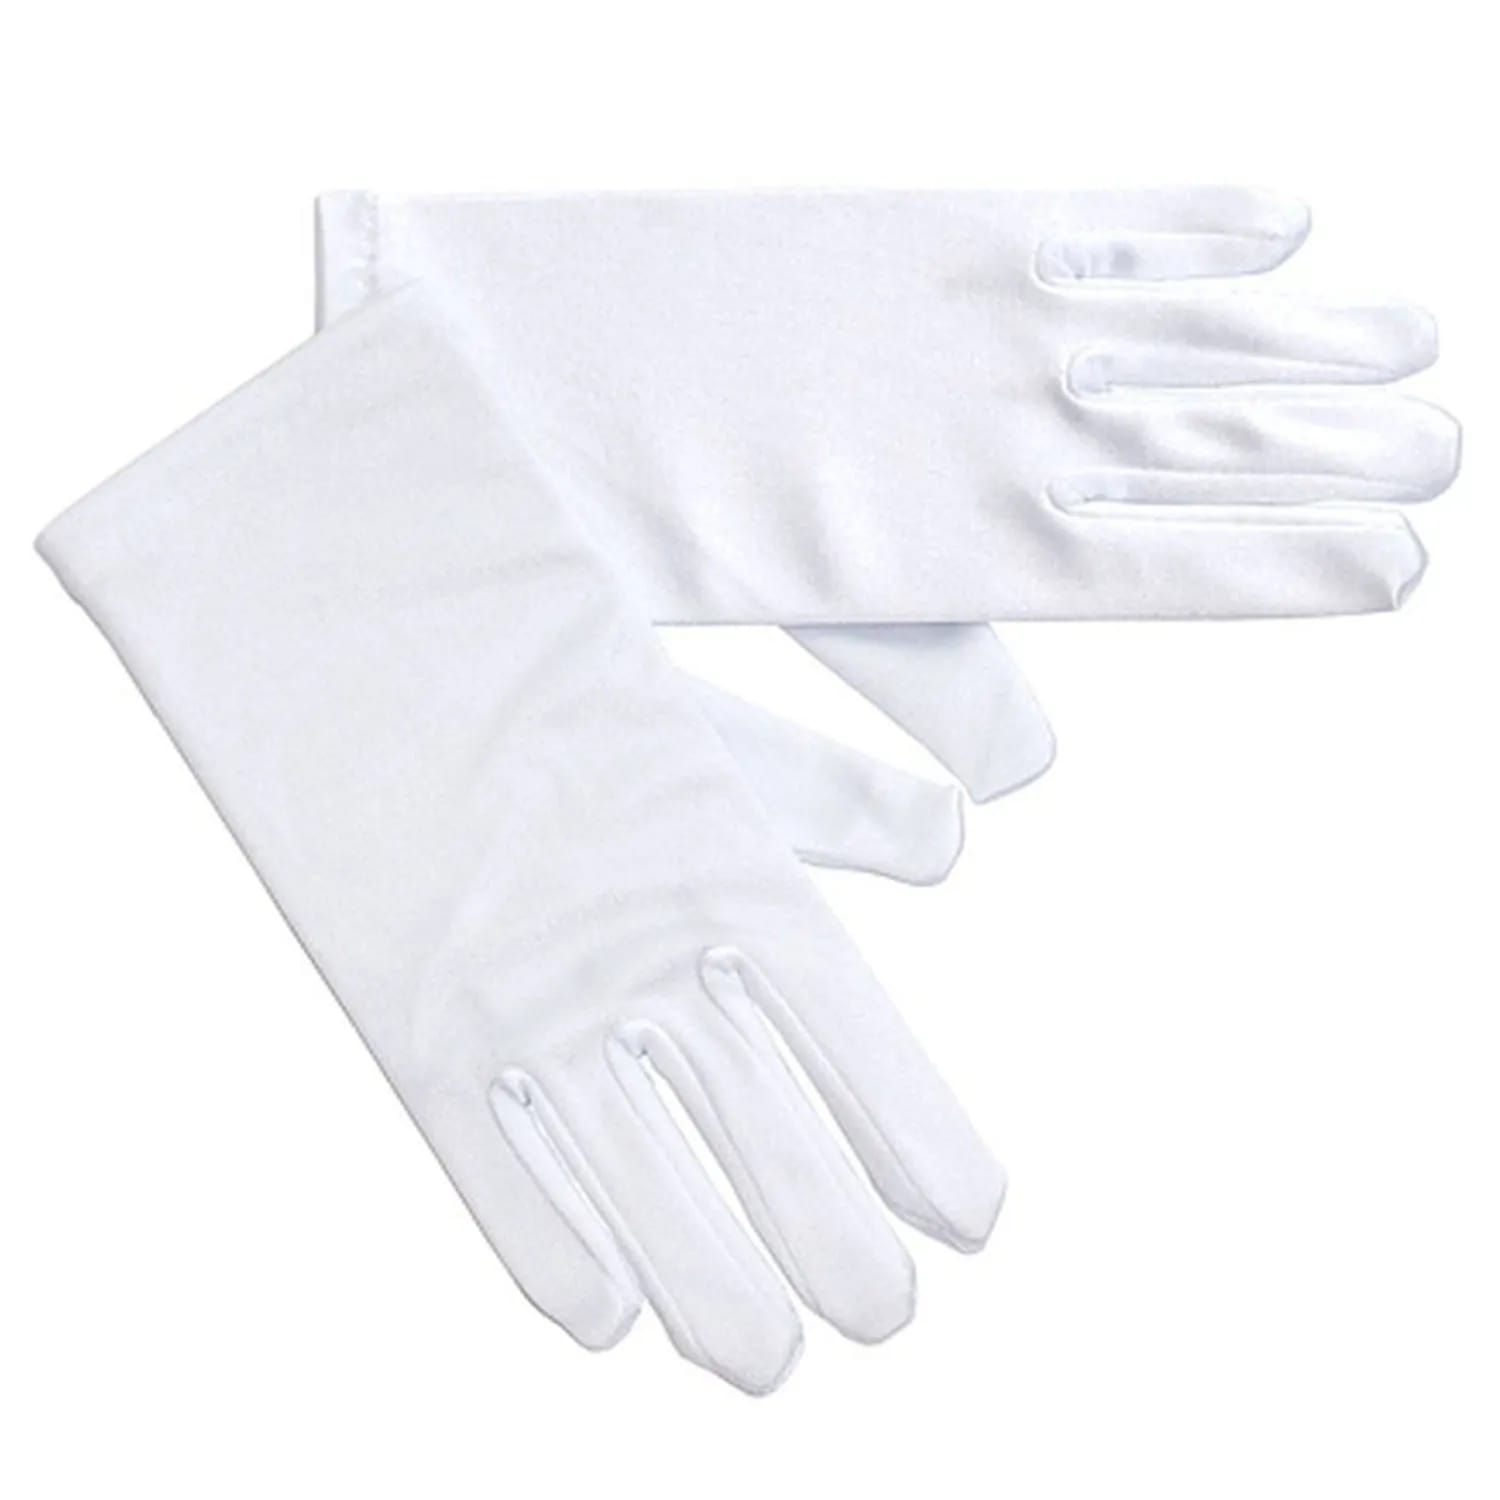 White Gloves - Set of 10 Pairs